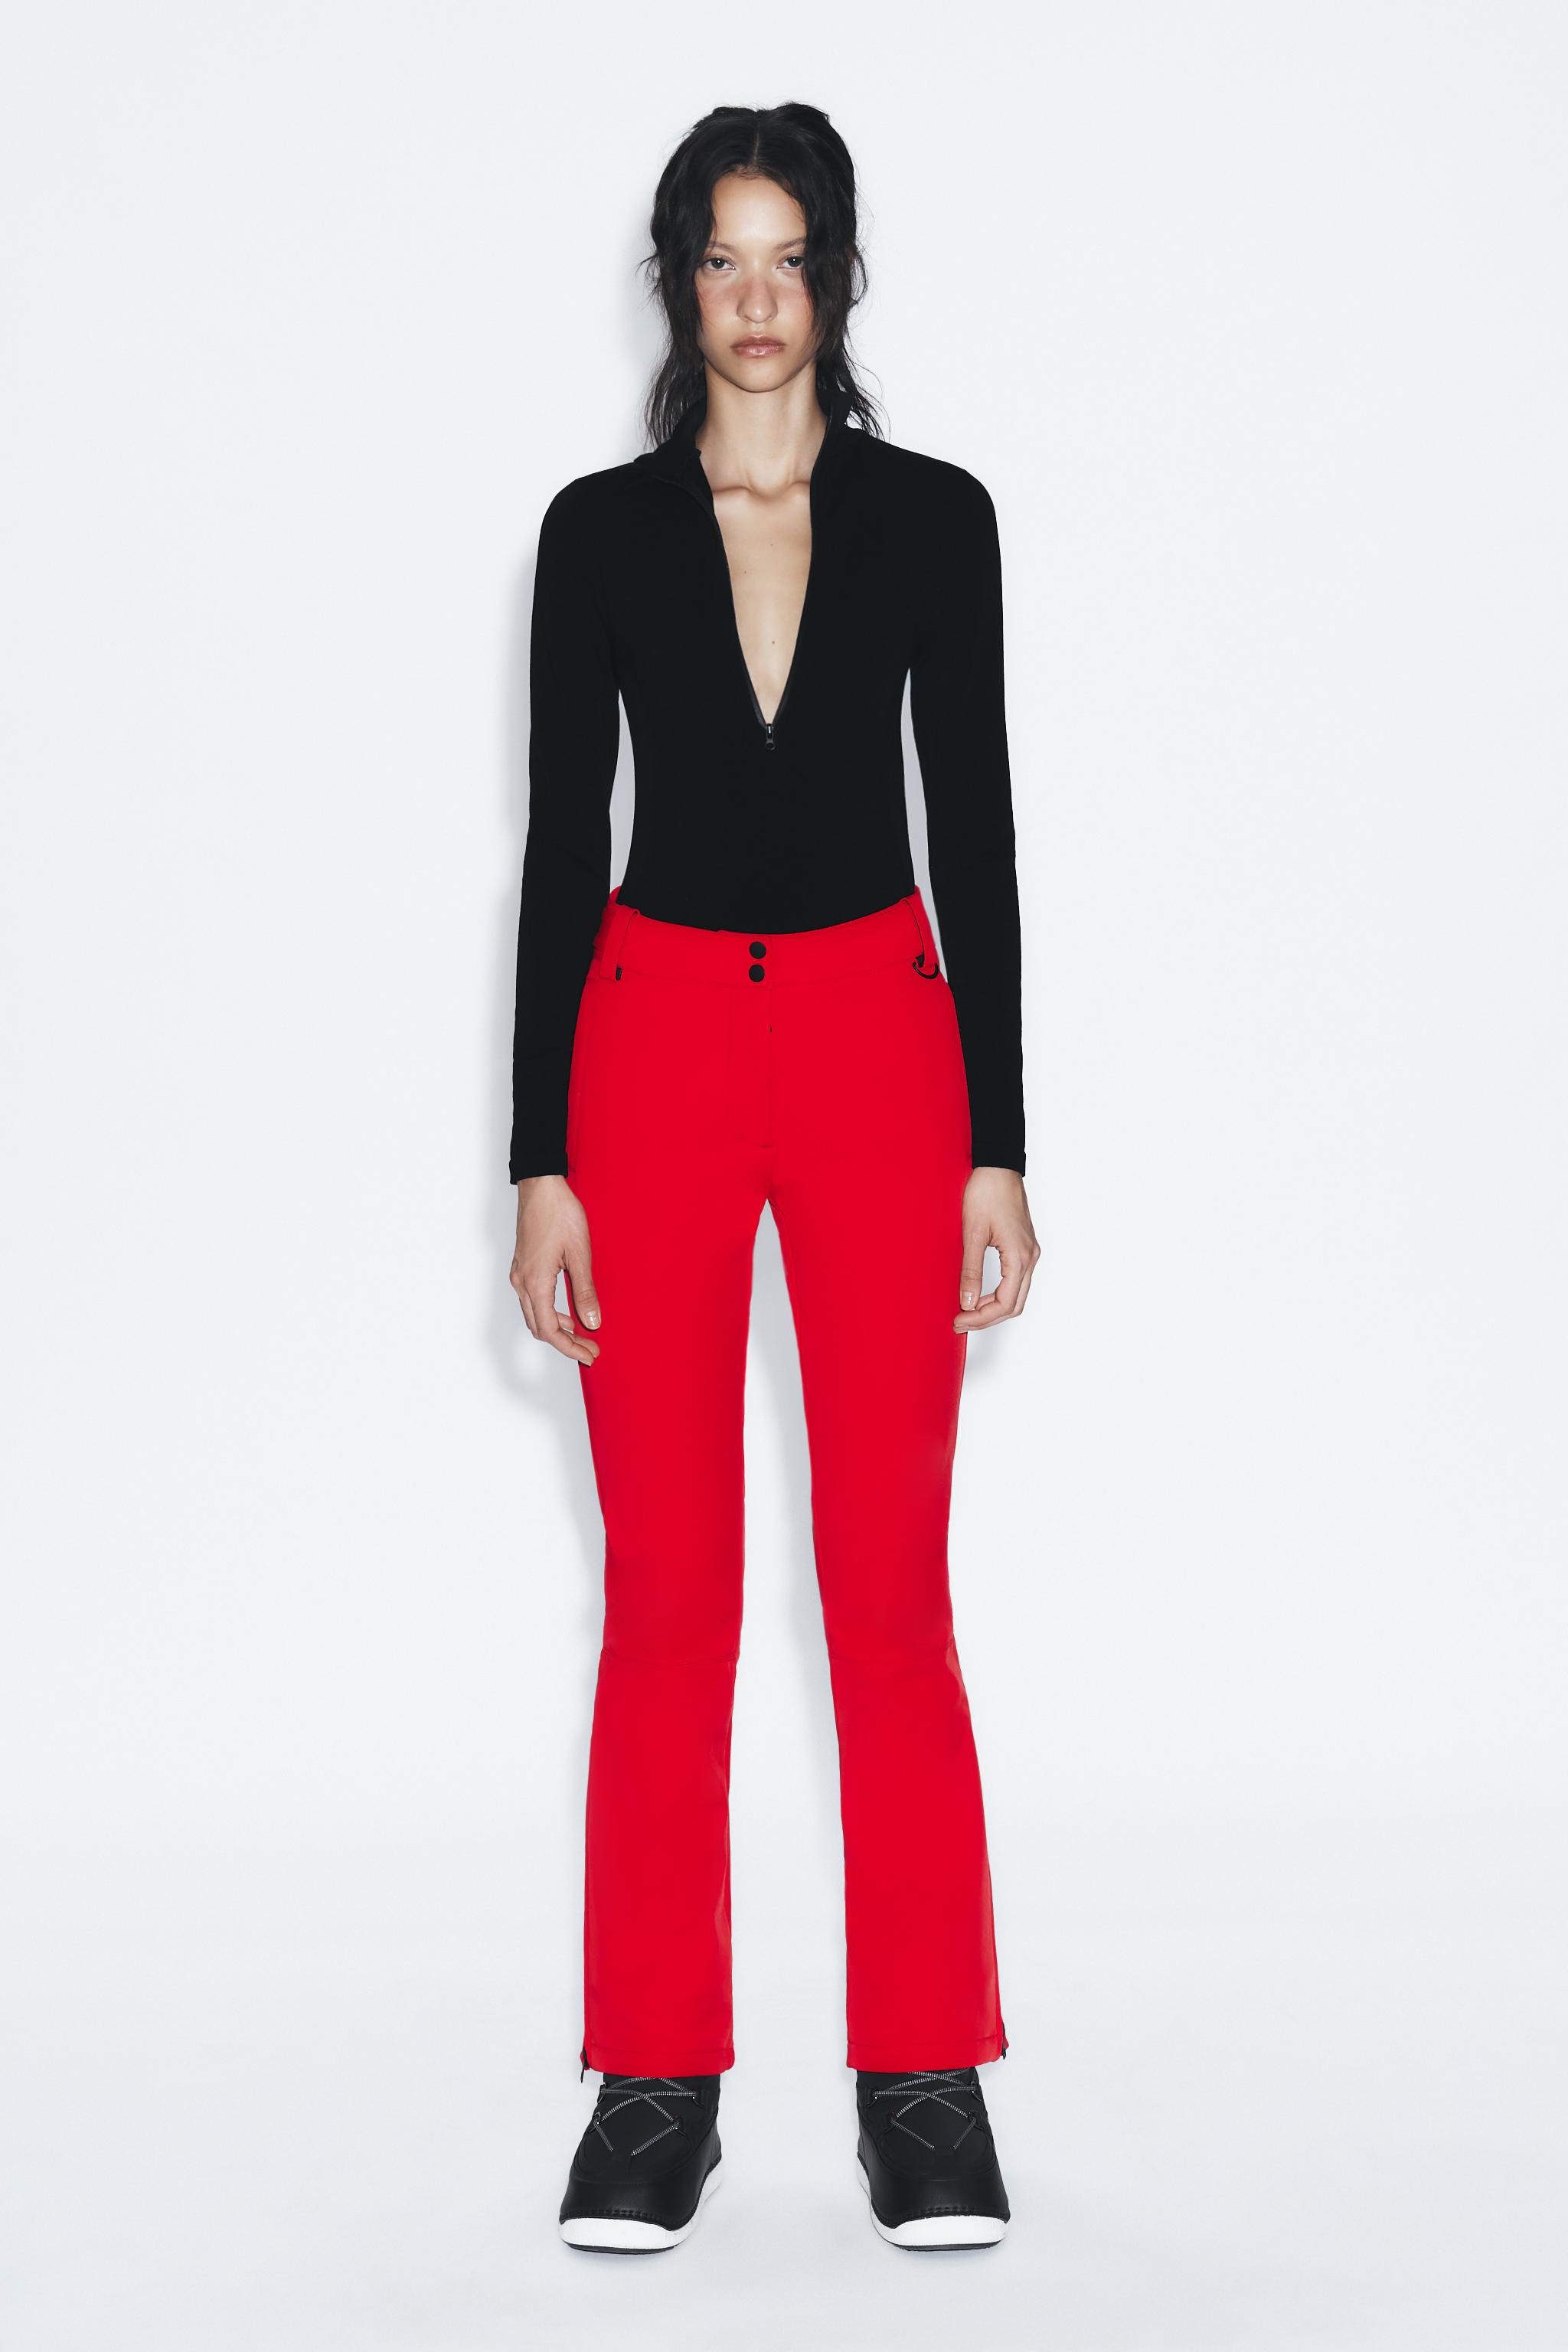 Zara pants set small and medium16500 (NO STRETCH) Riverisland